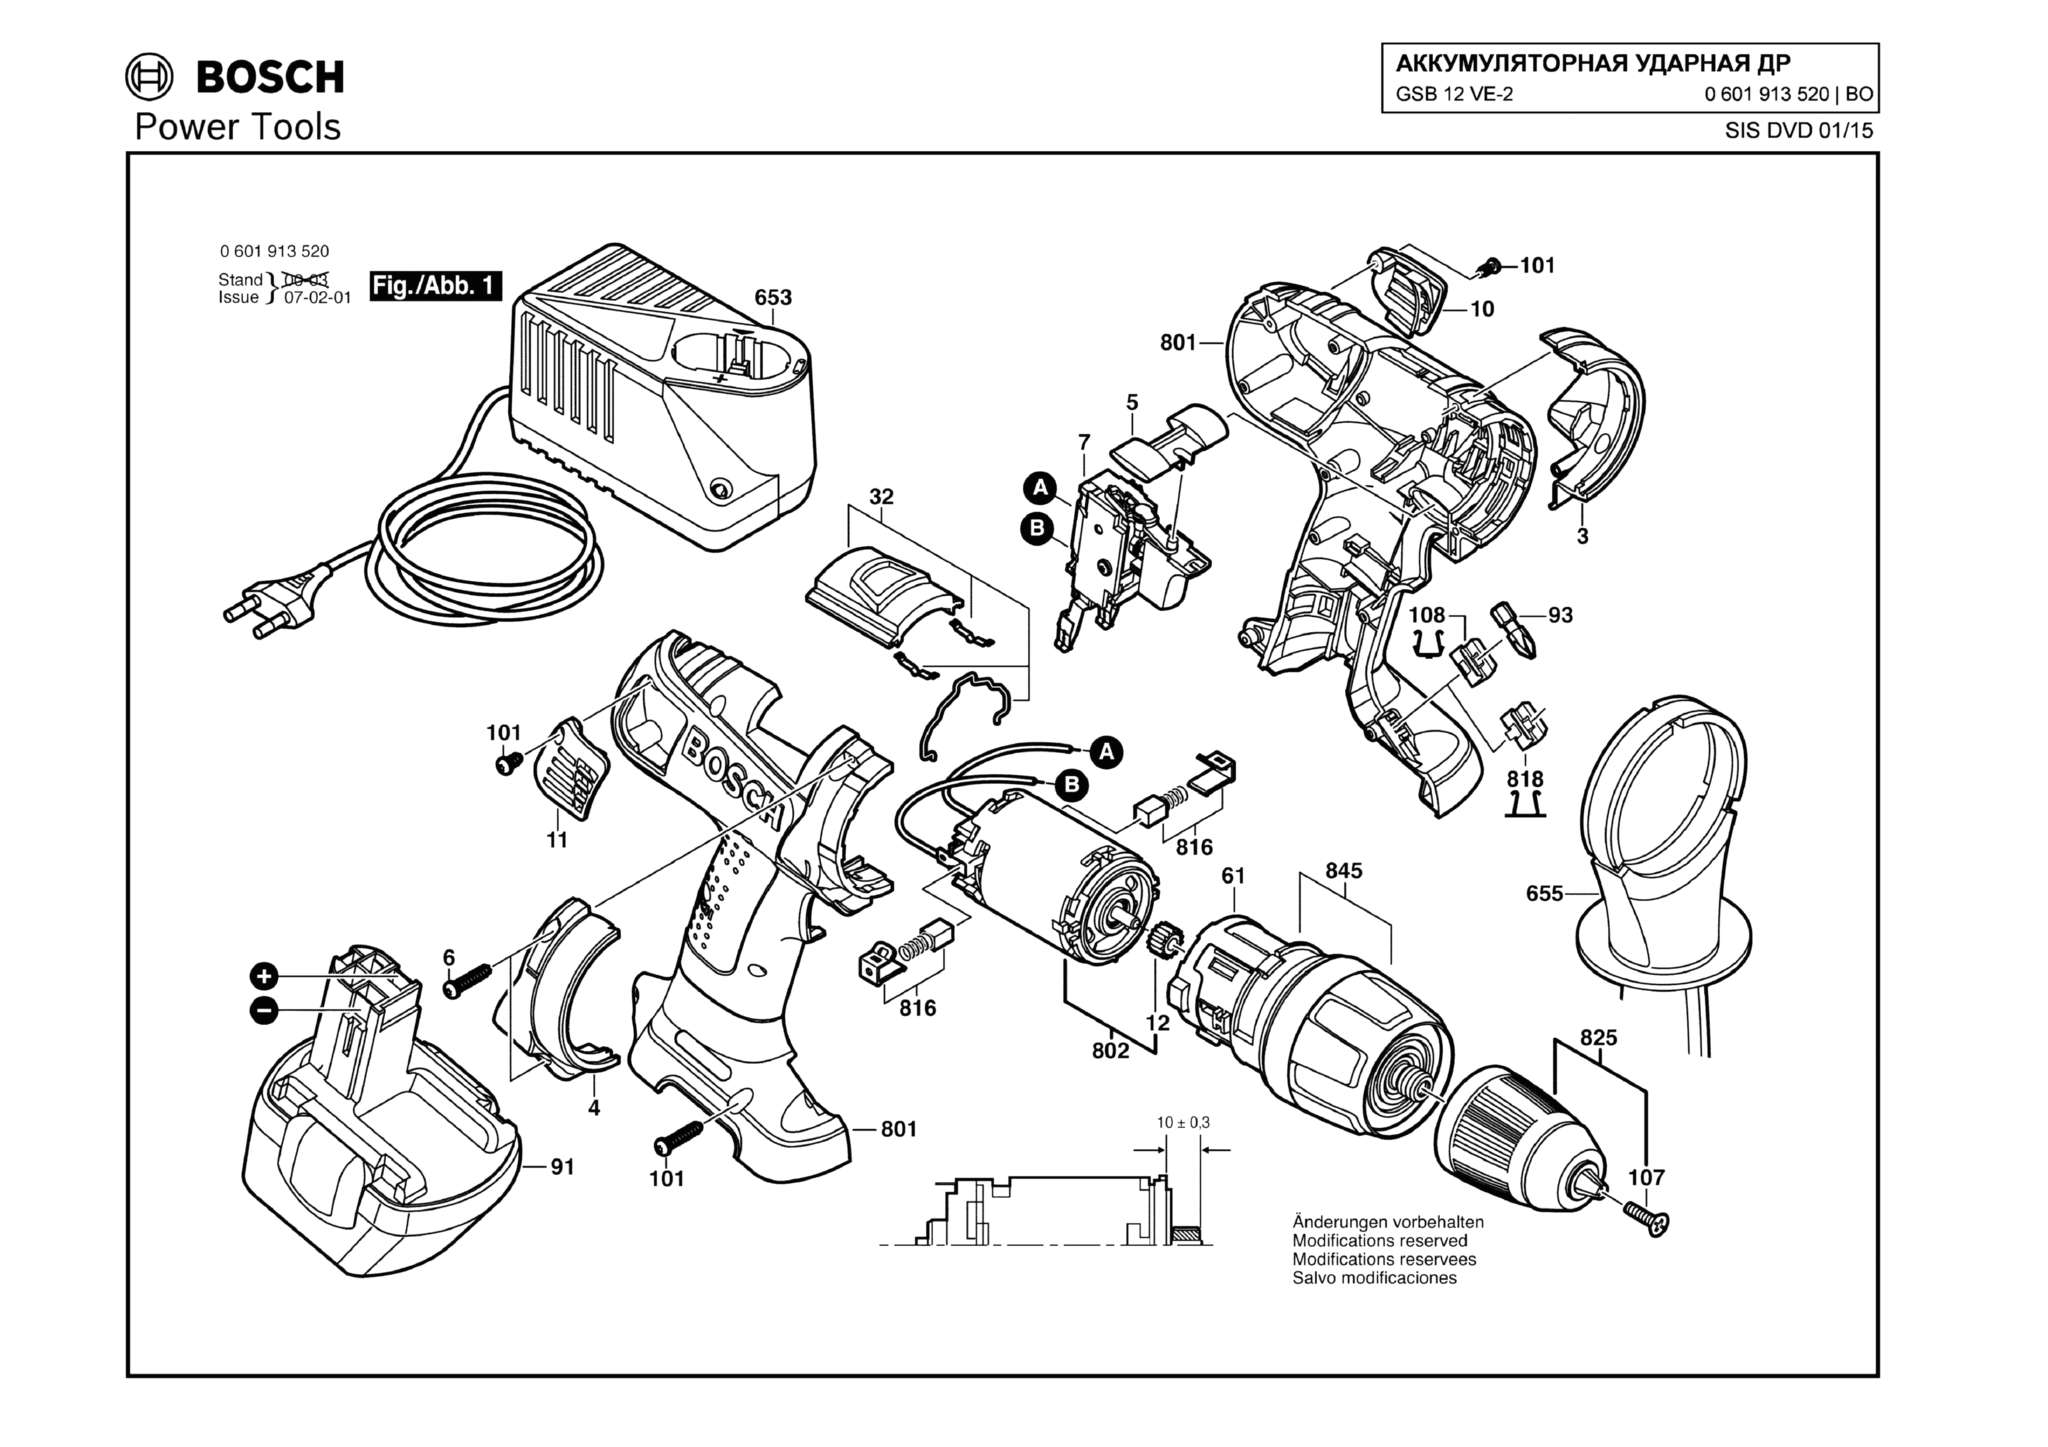 Запчасти, схема и деталировка Bosch GSB 12 VE-2 (ТИП 0601913520)